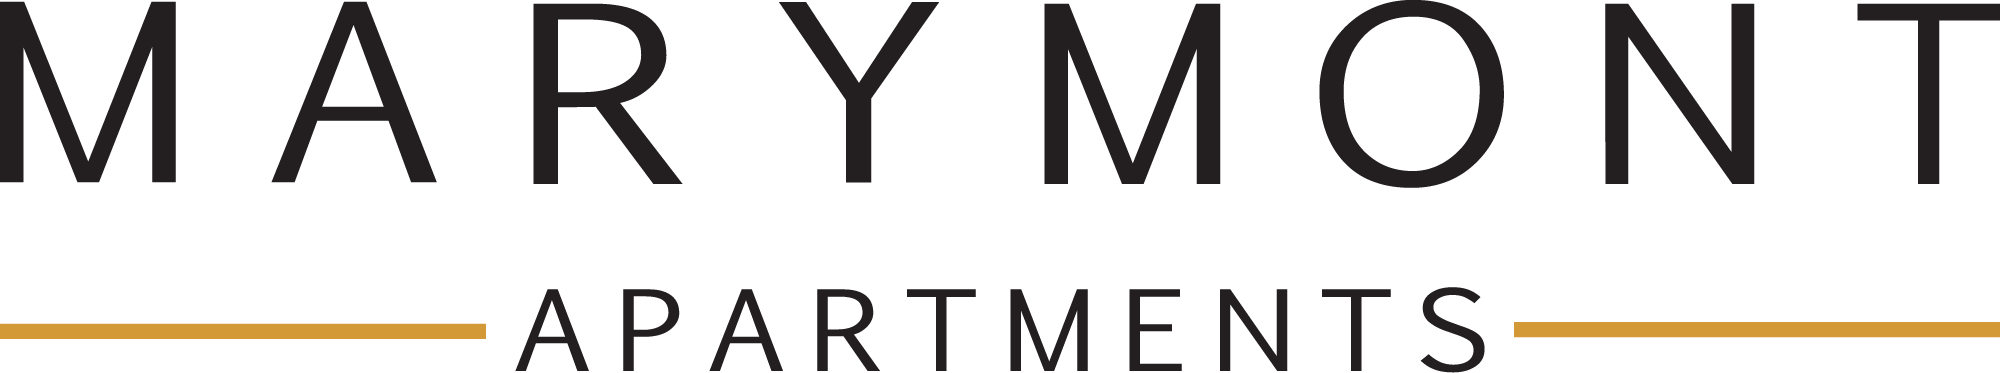 Marymont Apartments Logo